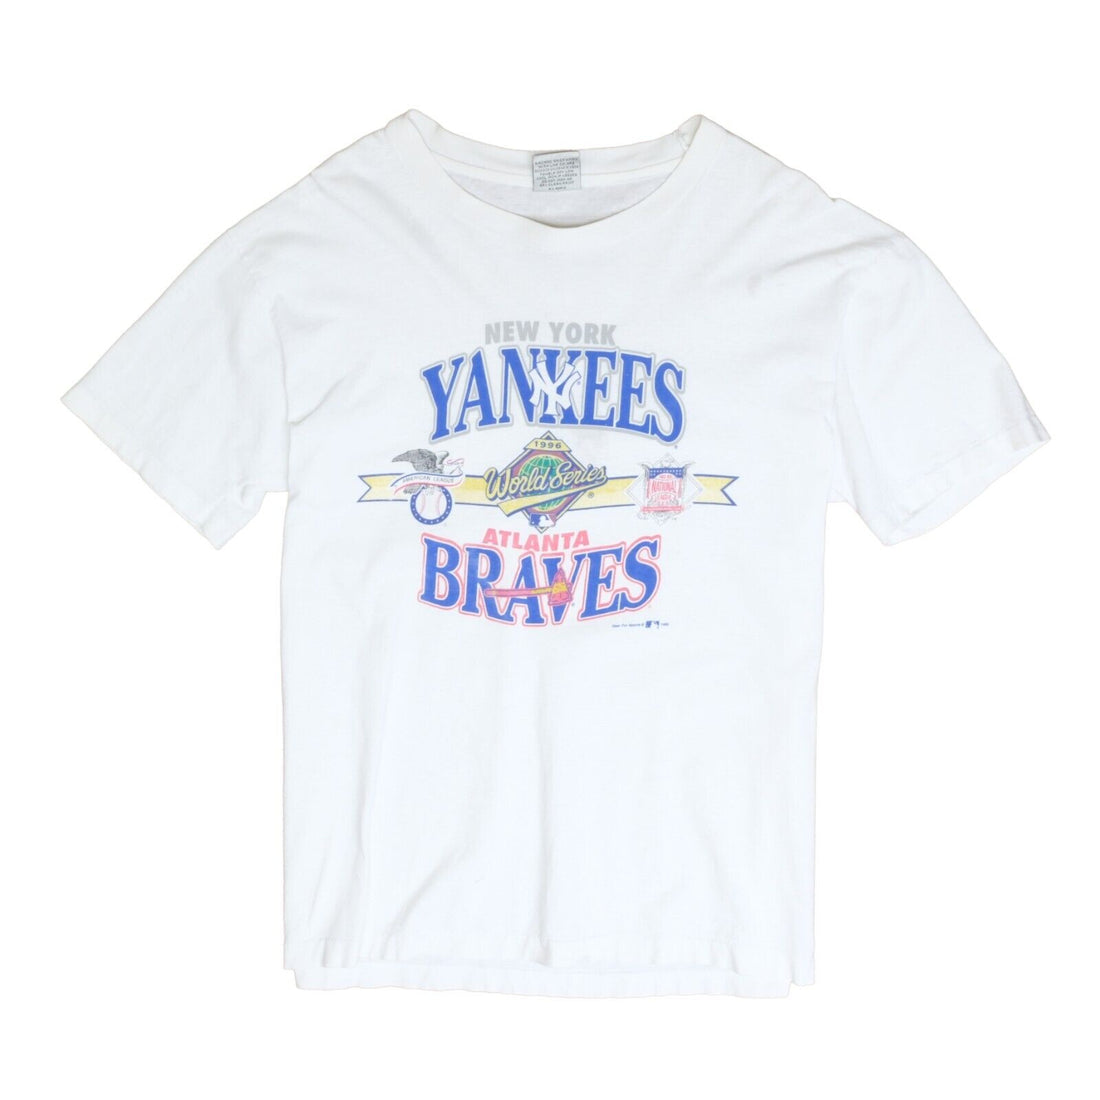 Vintage MLB (Hanes) - Atlanta Braves Vs Toronto Blue Jays World Series T-Shirt 1992 Large